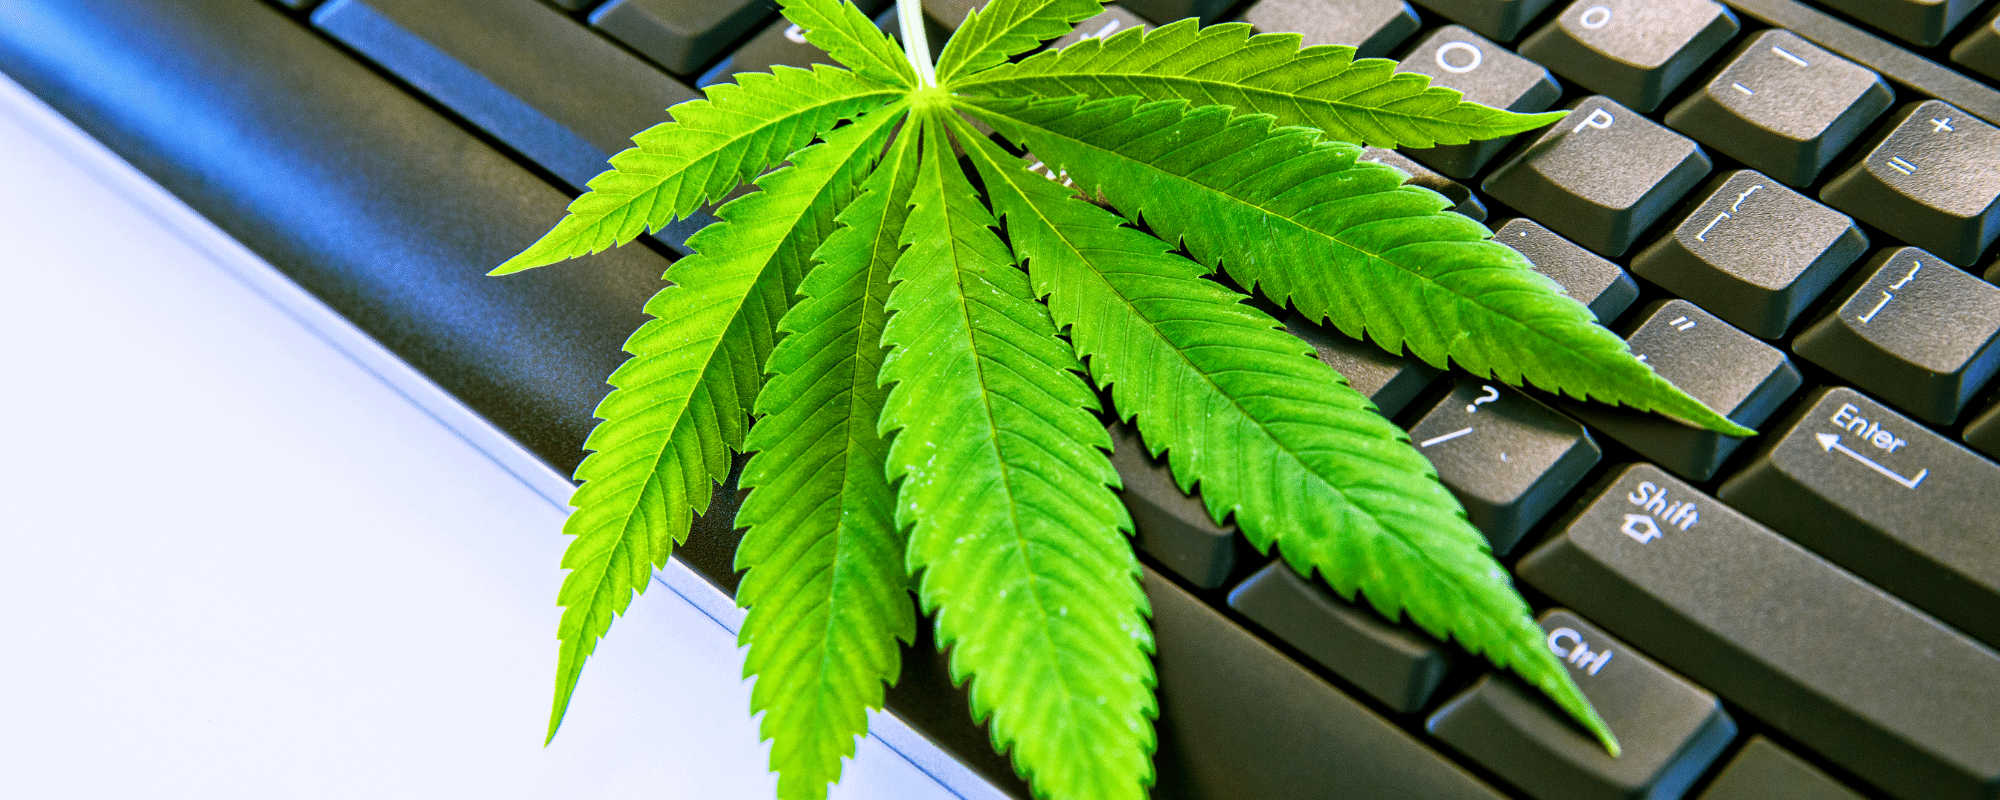 is marijuana legal in the netherlands